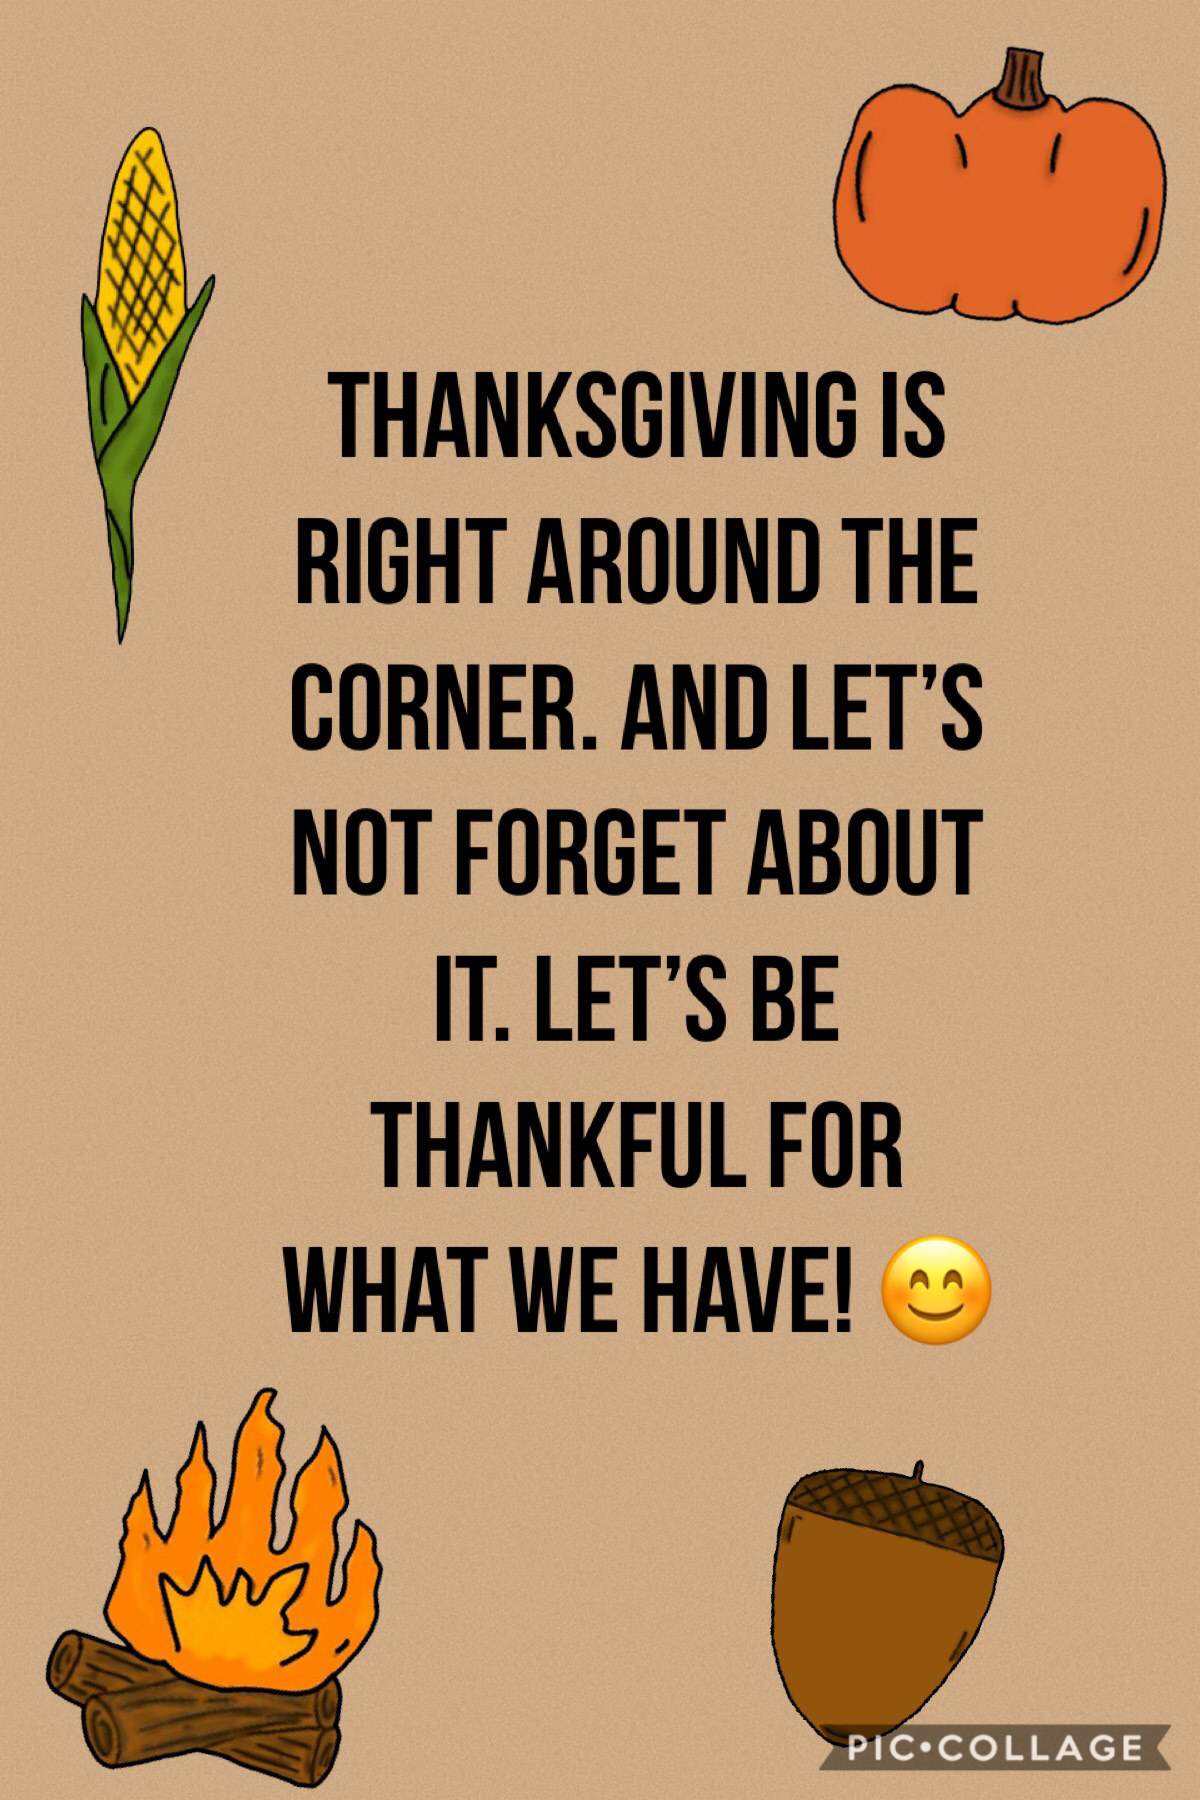 Happy Thanksgiving! 🍁 